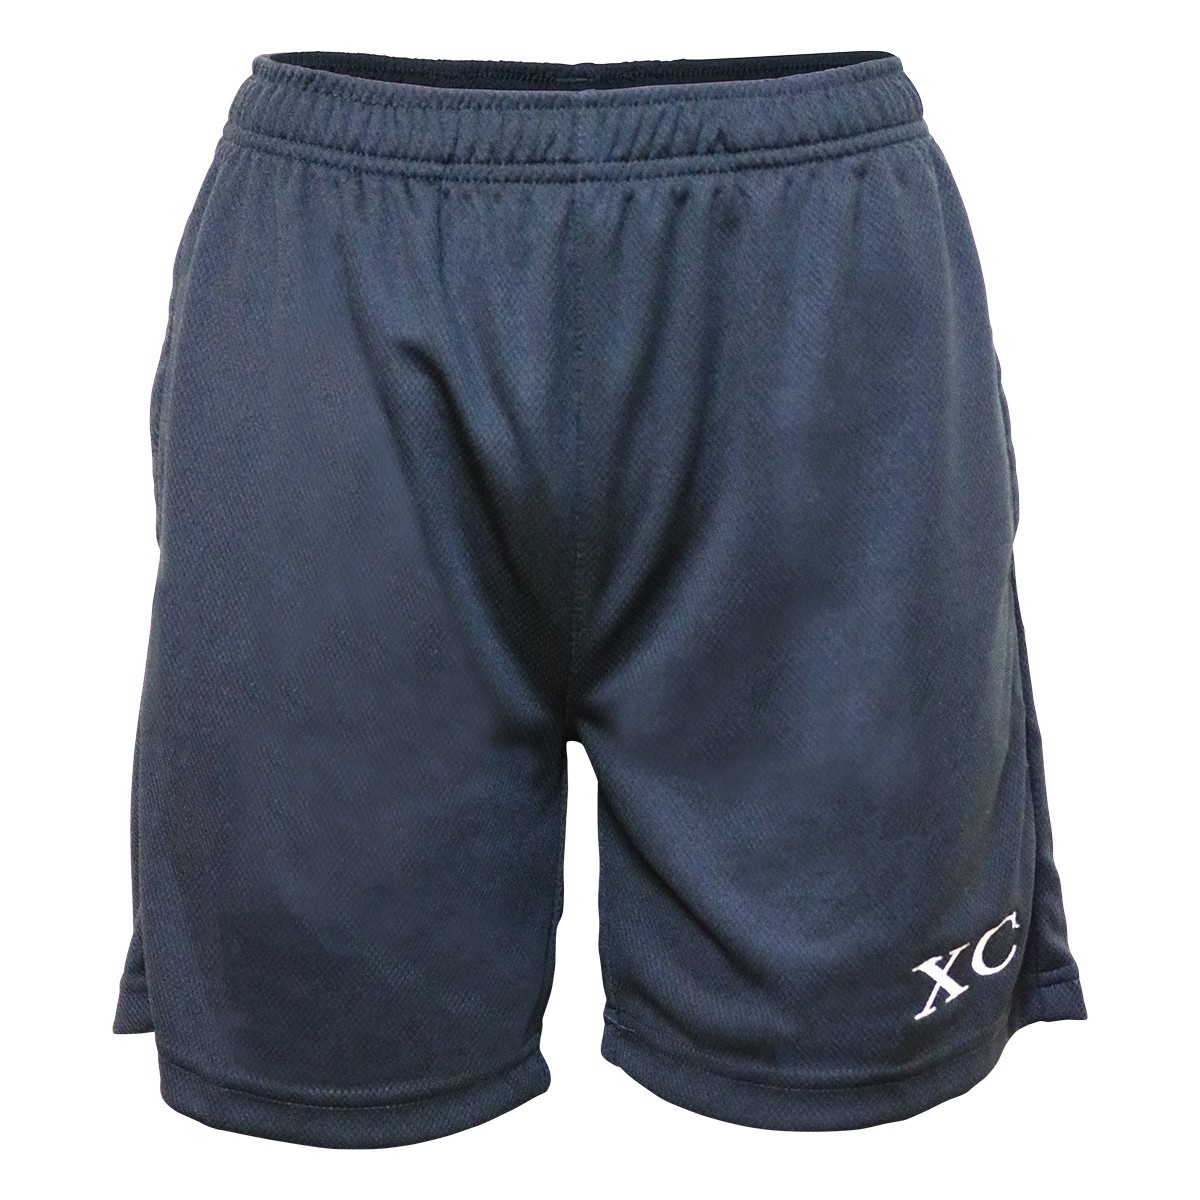 Shorts Black Sport (Trutex) - School Locker